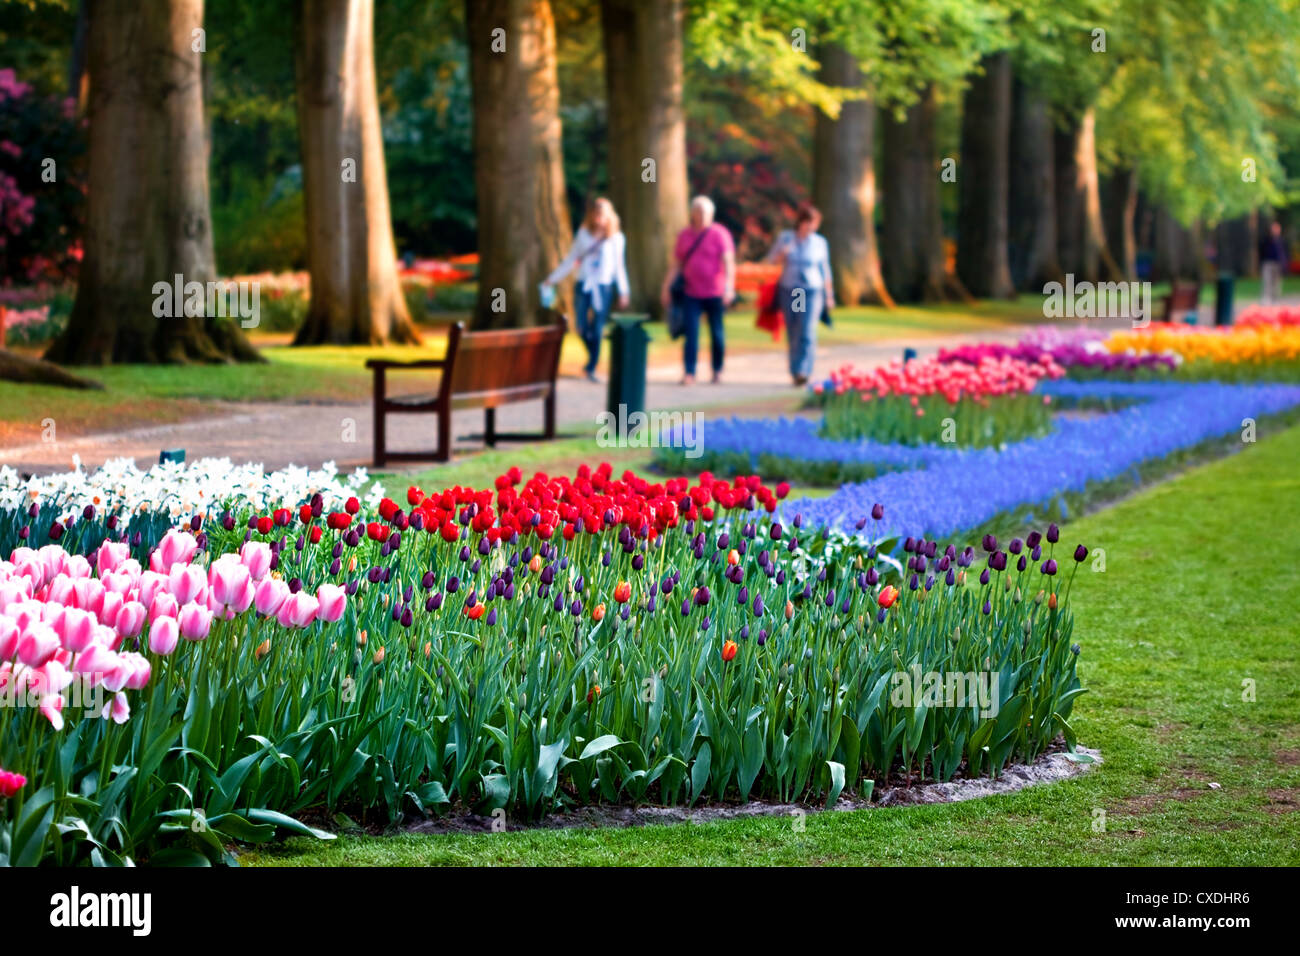 Beautiful garden of colorful flowers - Keukenhof in the Netherlands Stock Photo